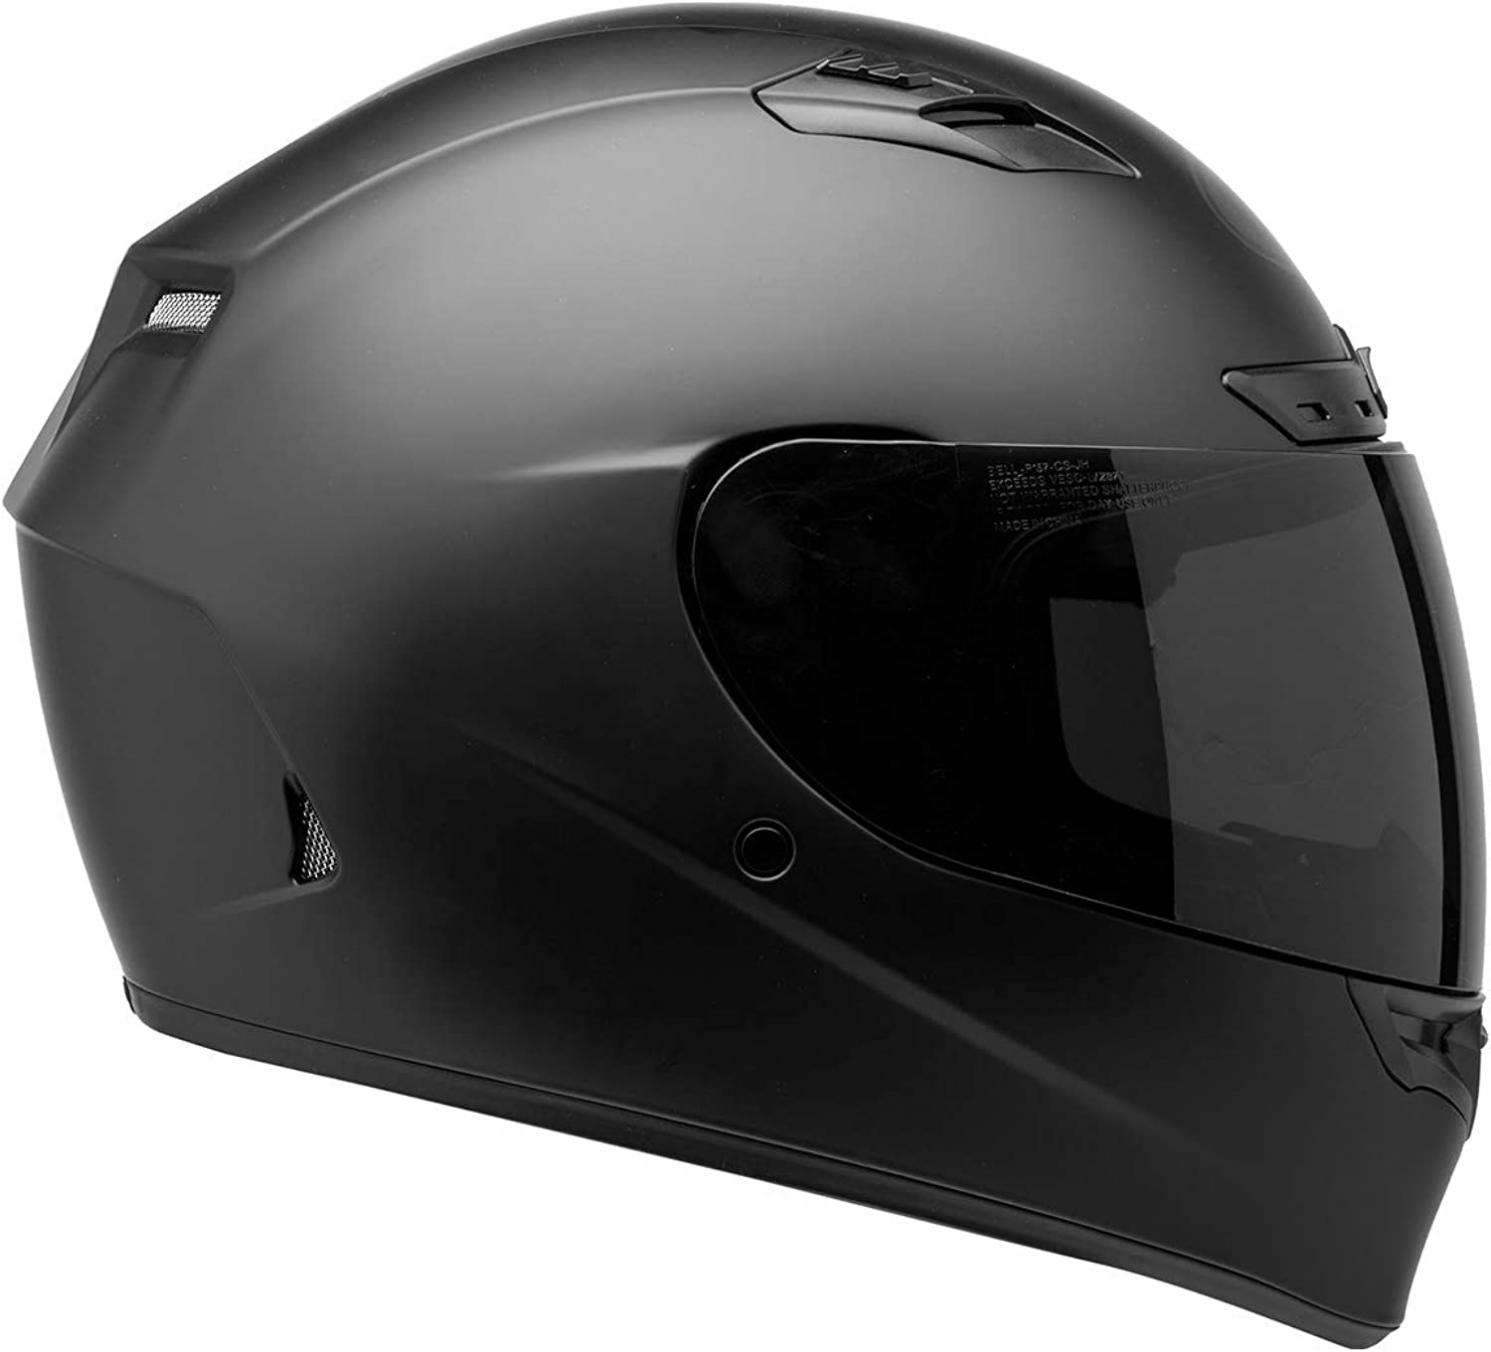 Bell Unisex-Adult's Qualifier DLX Blackout Motorcycle Helmet